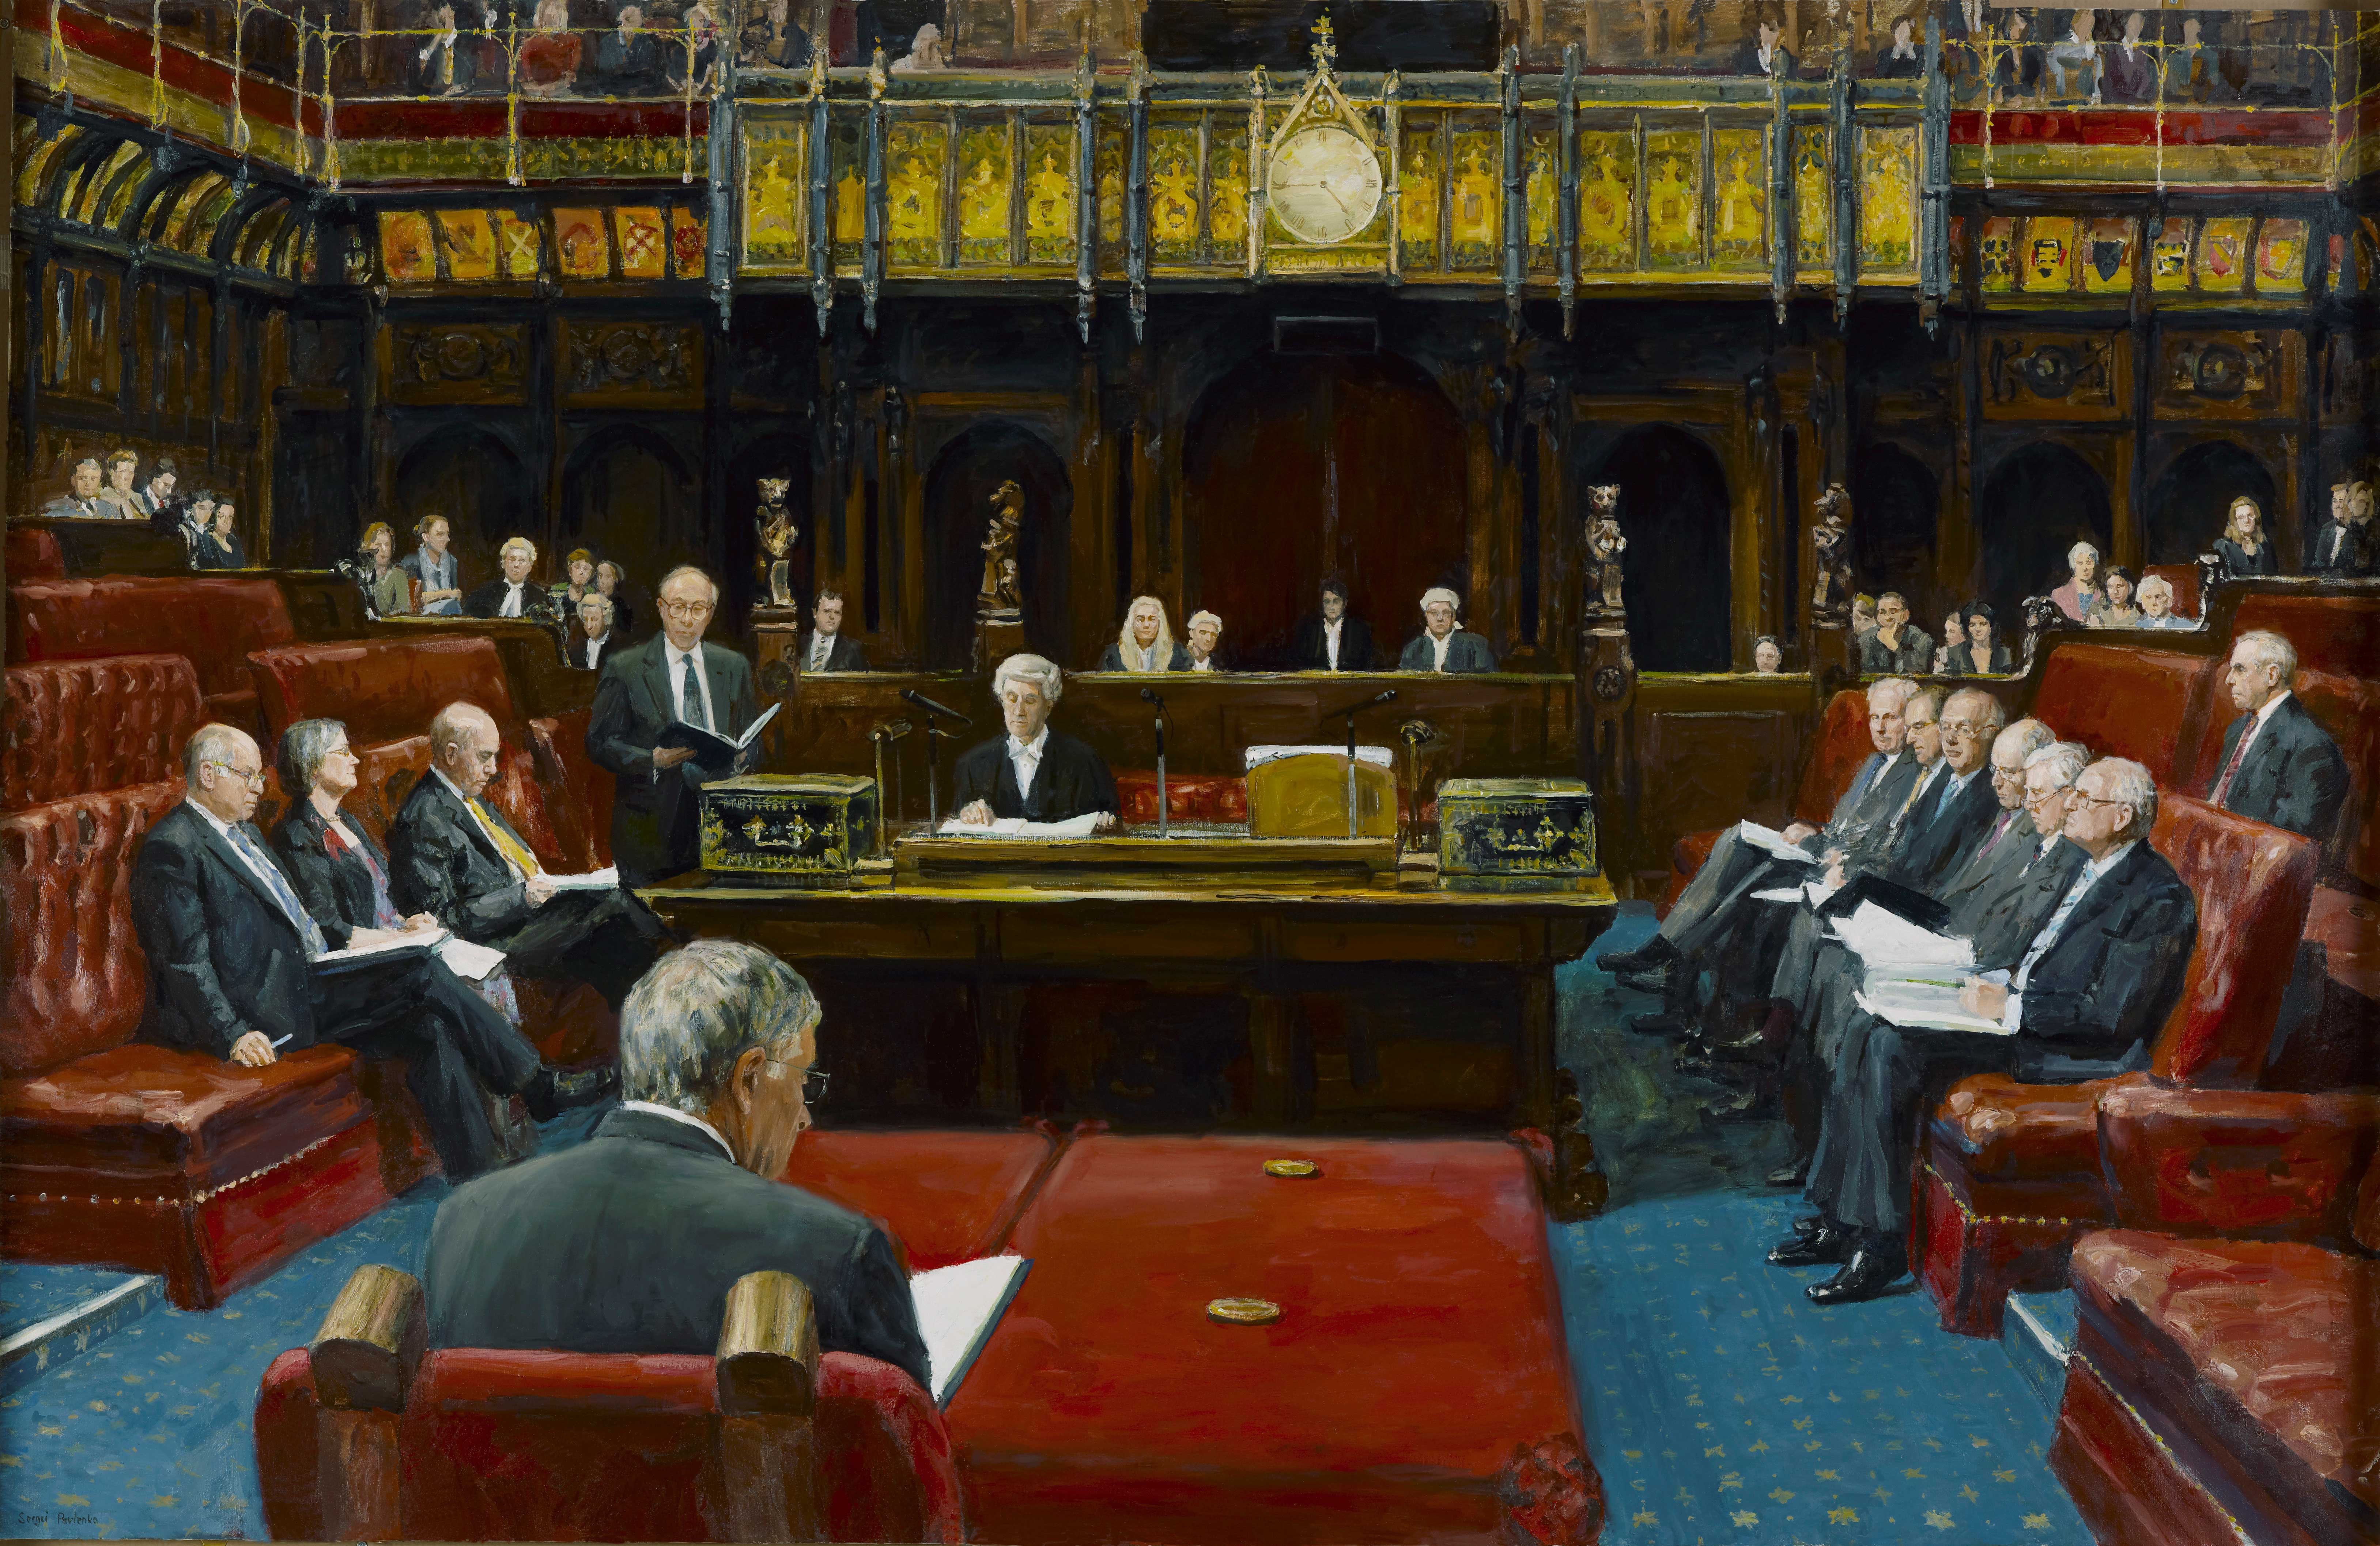 Supreme Court of Great Britain - 1, Sergei Pavlenko, Buy the painting Oil